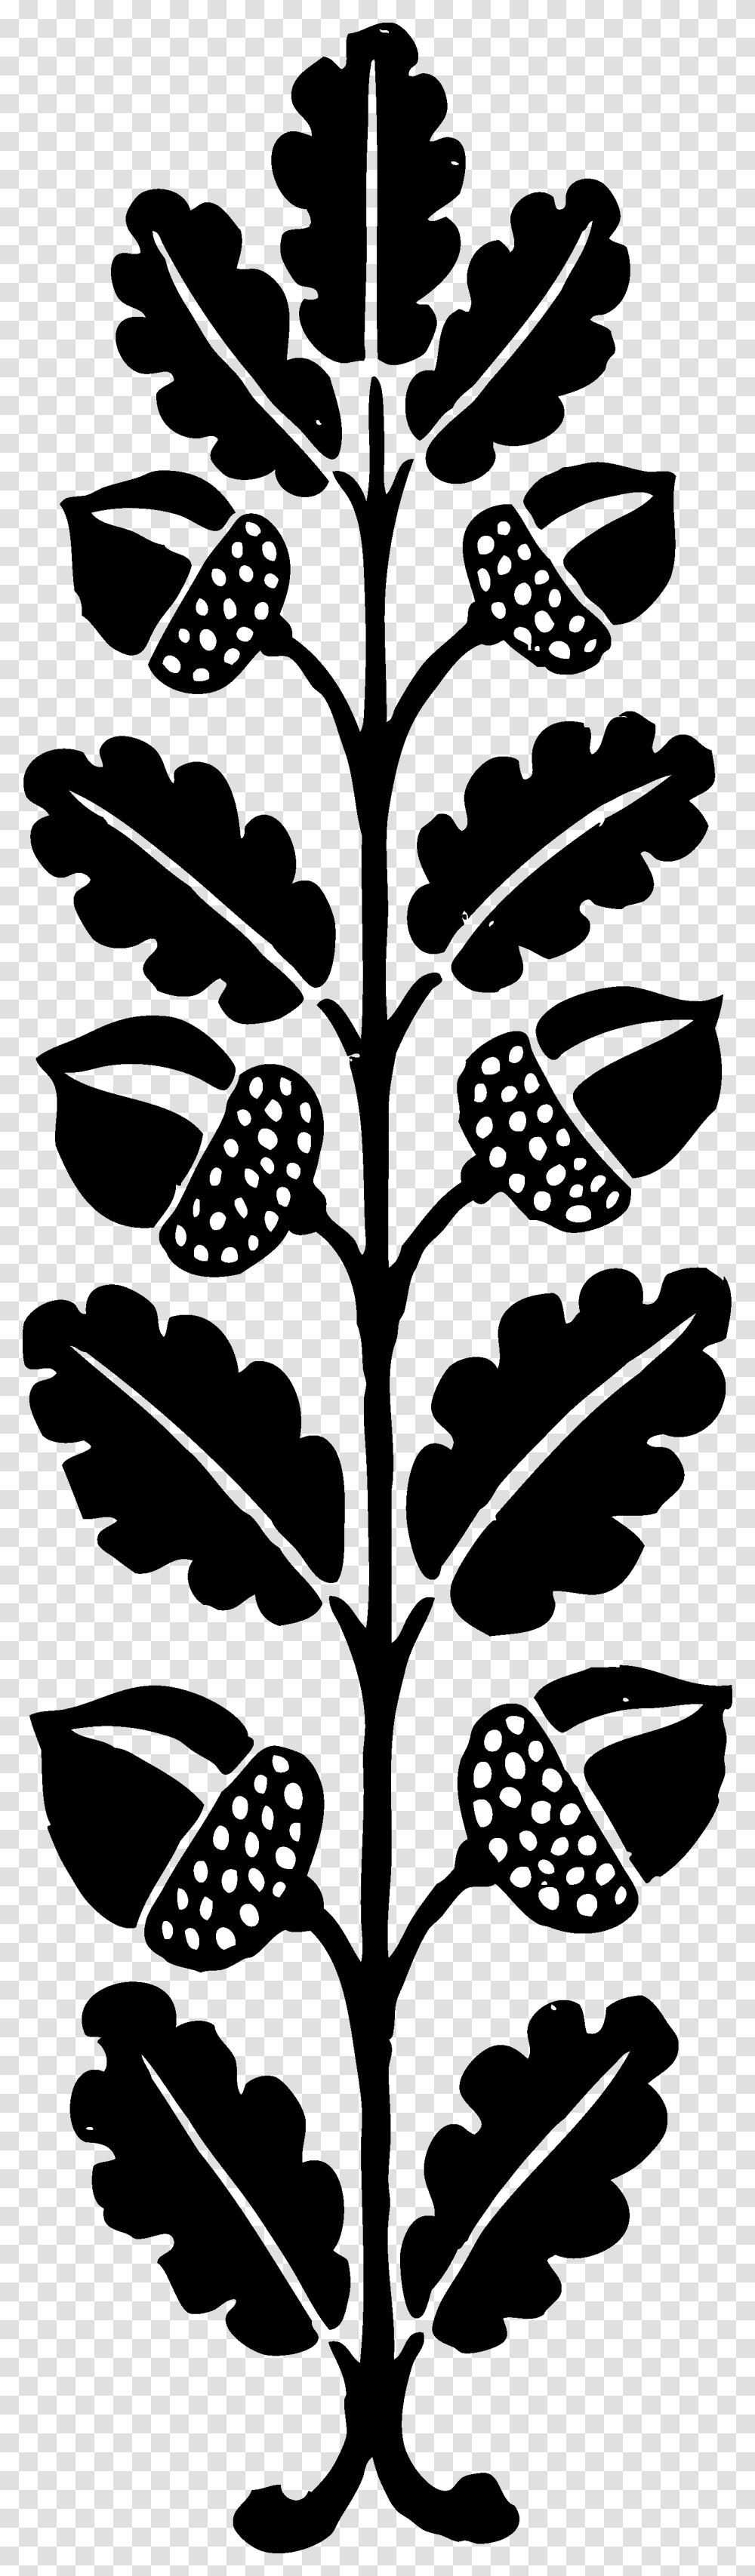 Acorn Clipart Church Acorn Clip Art Free Black And White, Stencil, Seed, Grain, Produce Transparent Png